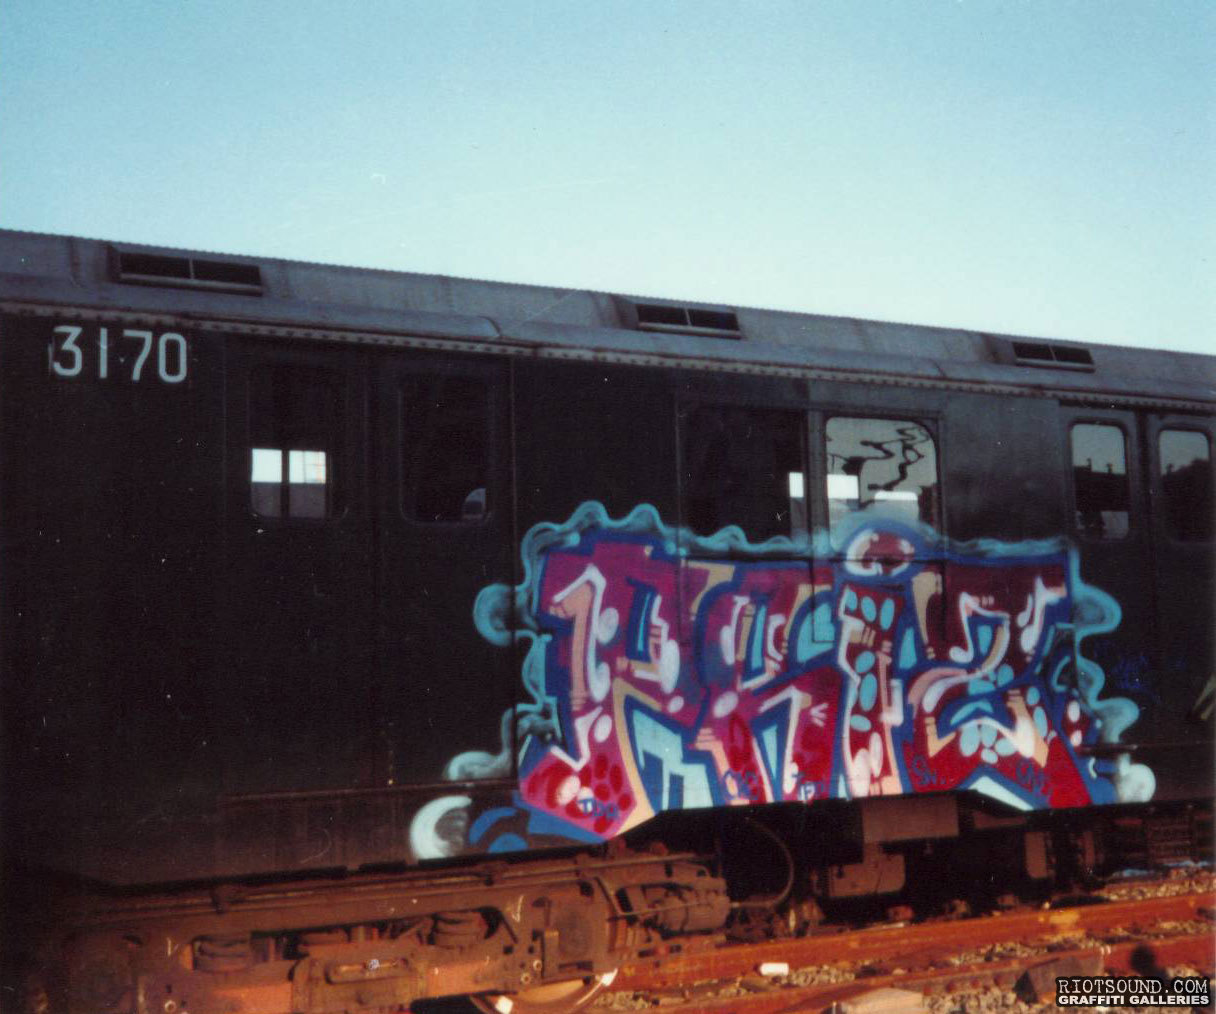 Graff_Art_On_Old_Subway_Car